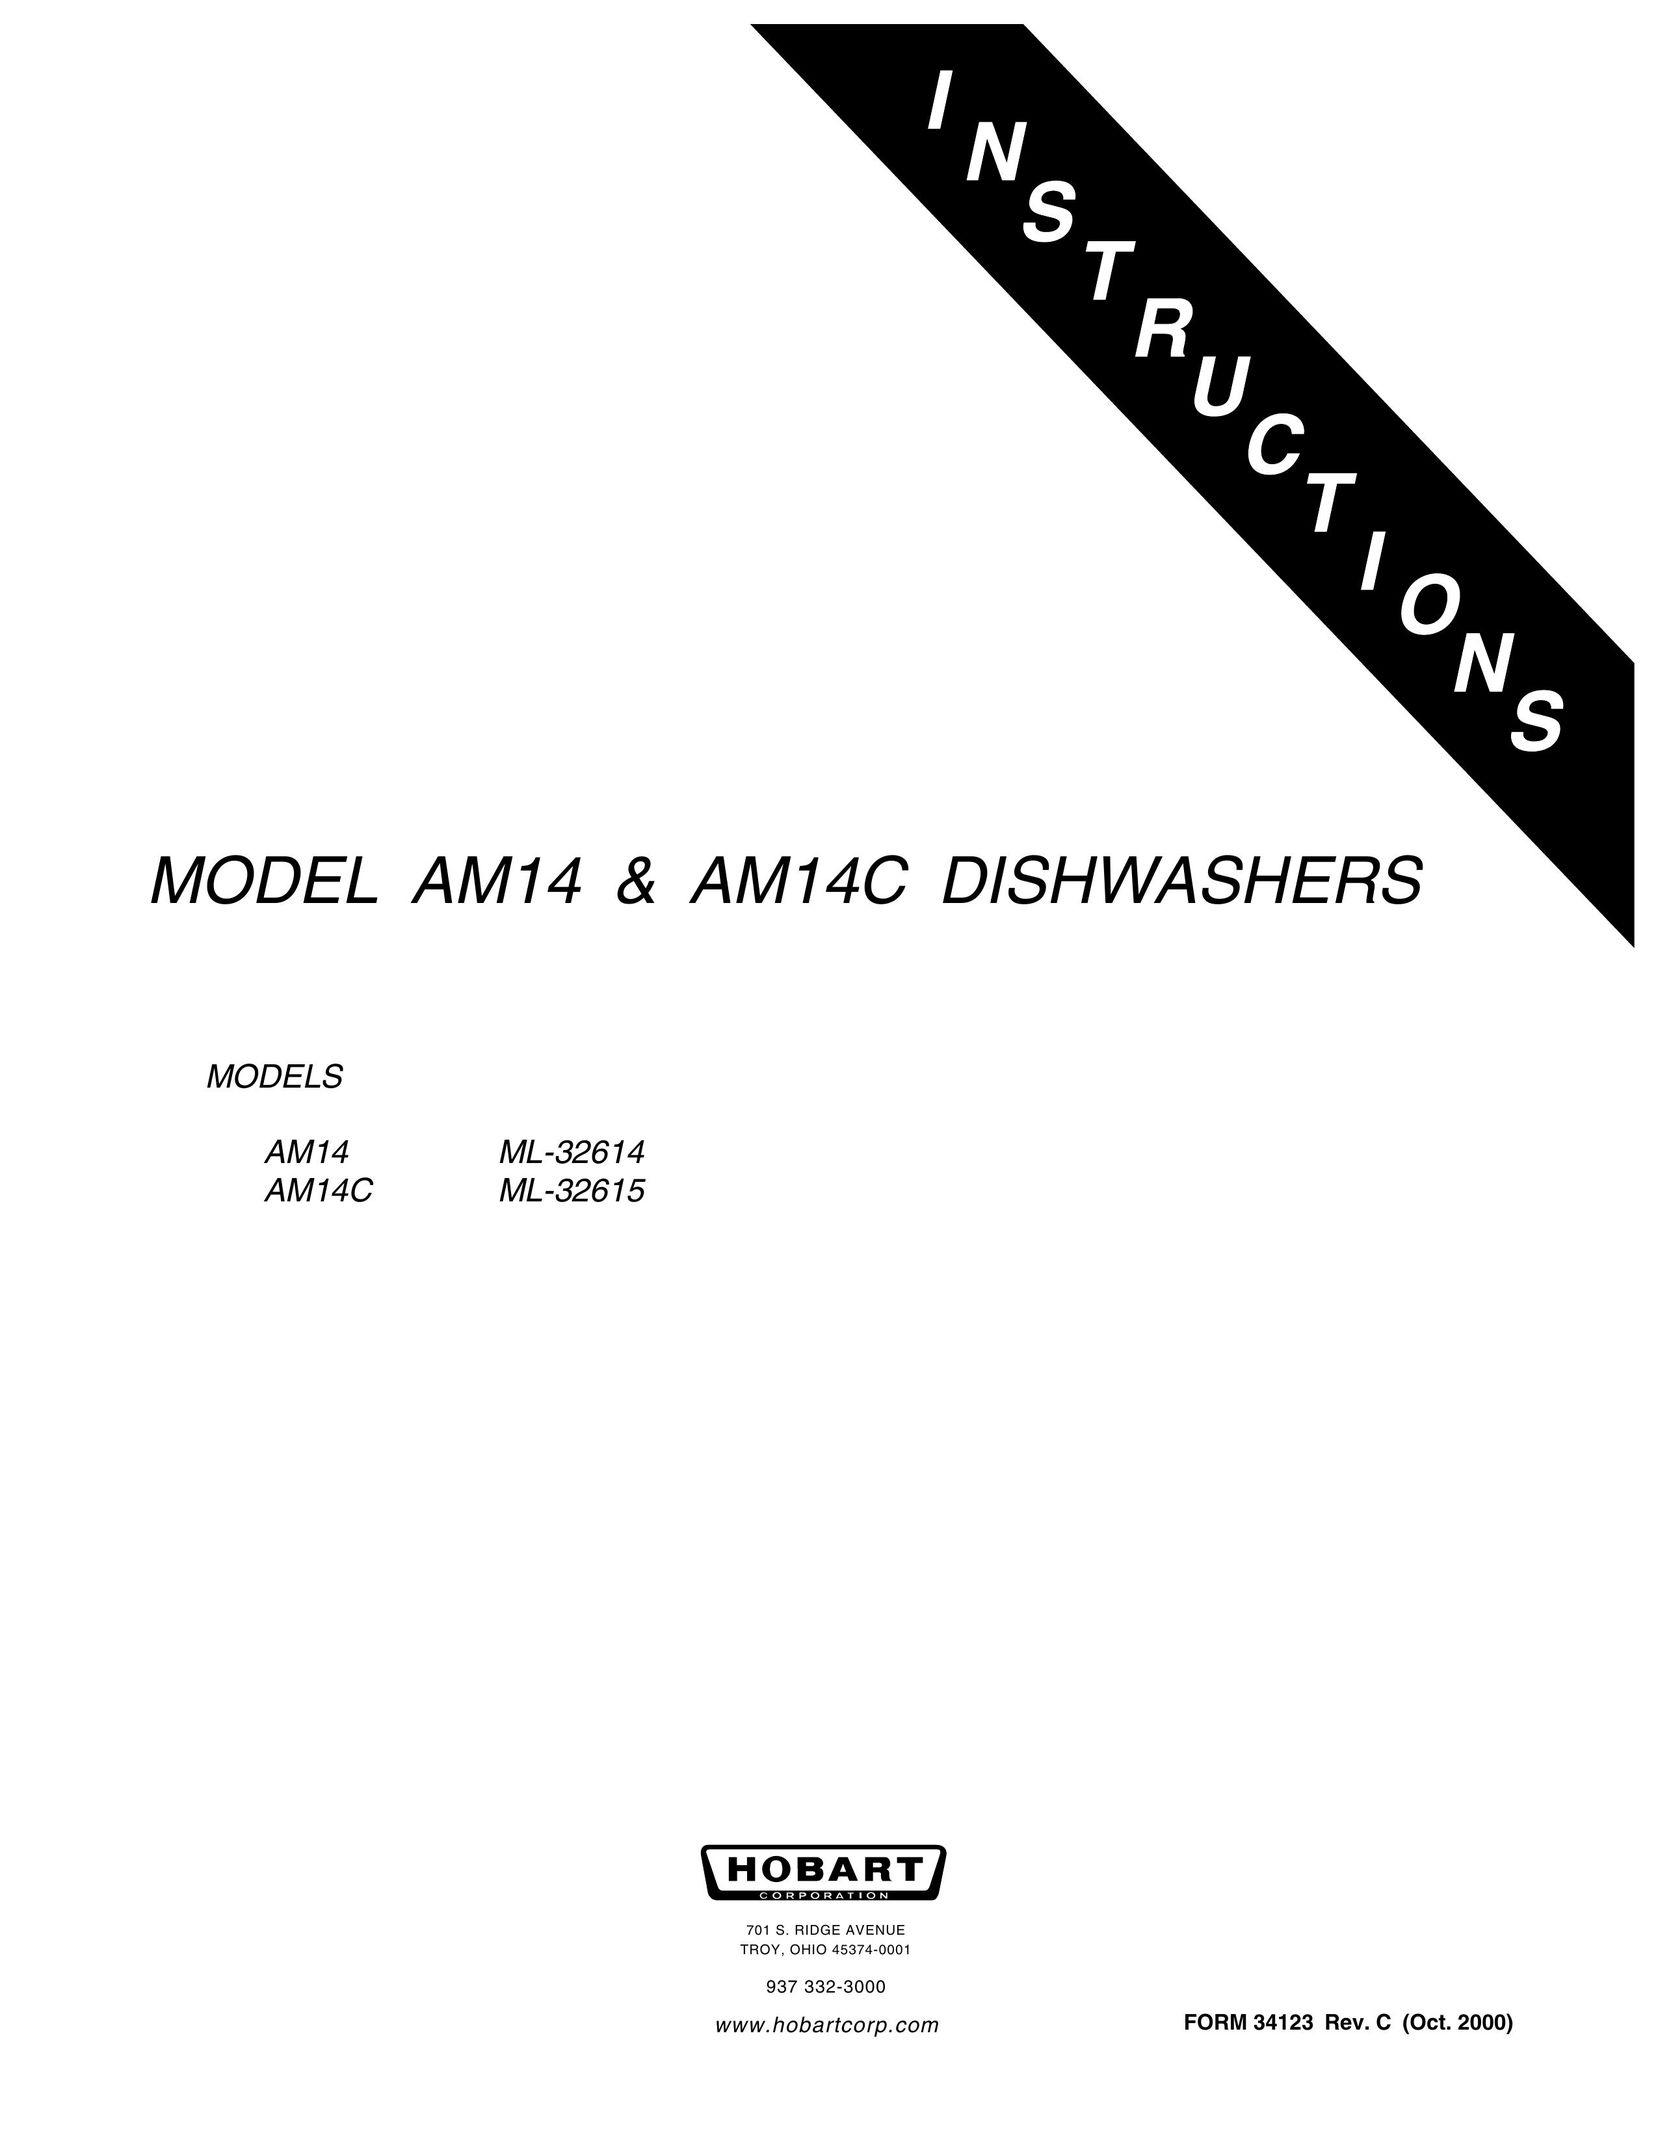 Hobart AM14C ML-32615 Dishwasher User Manual